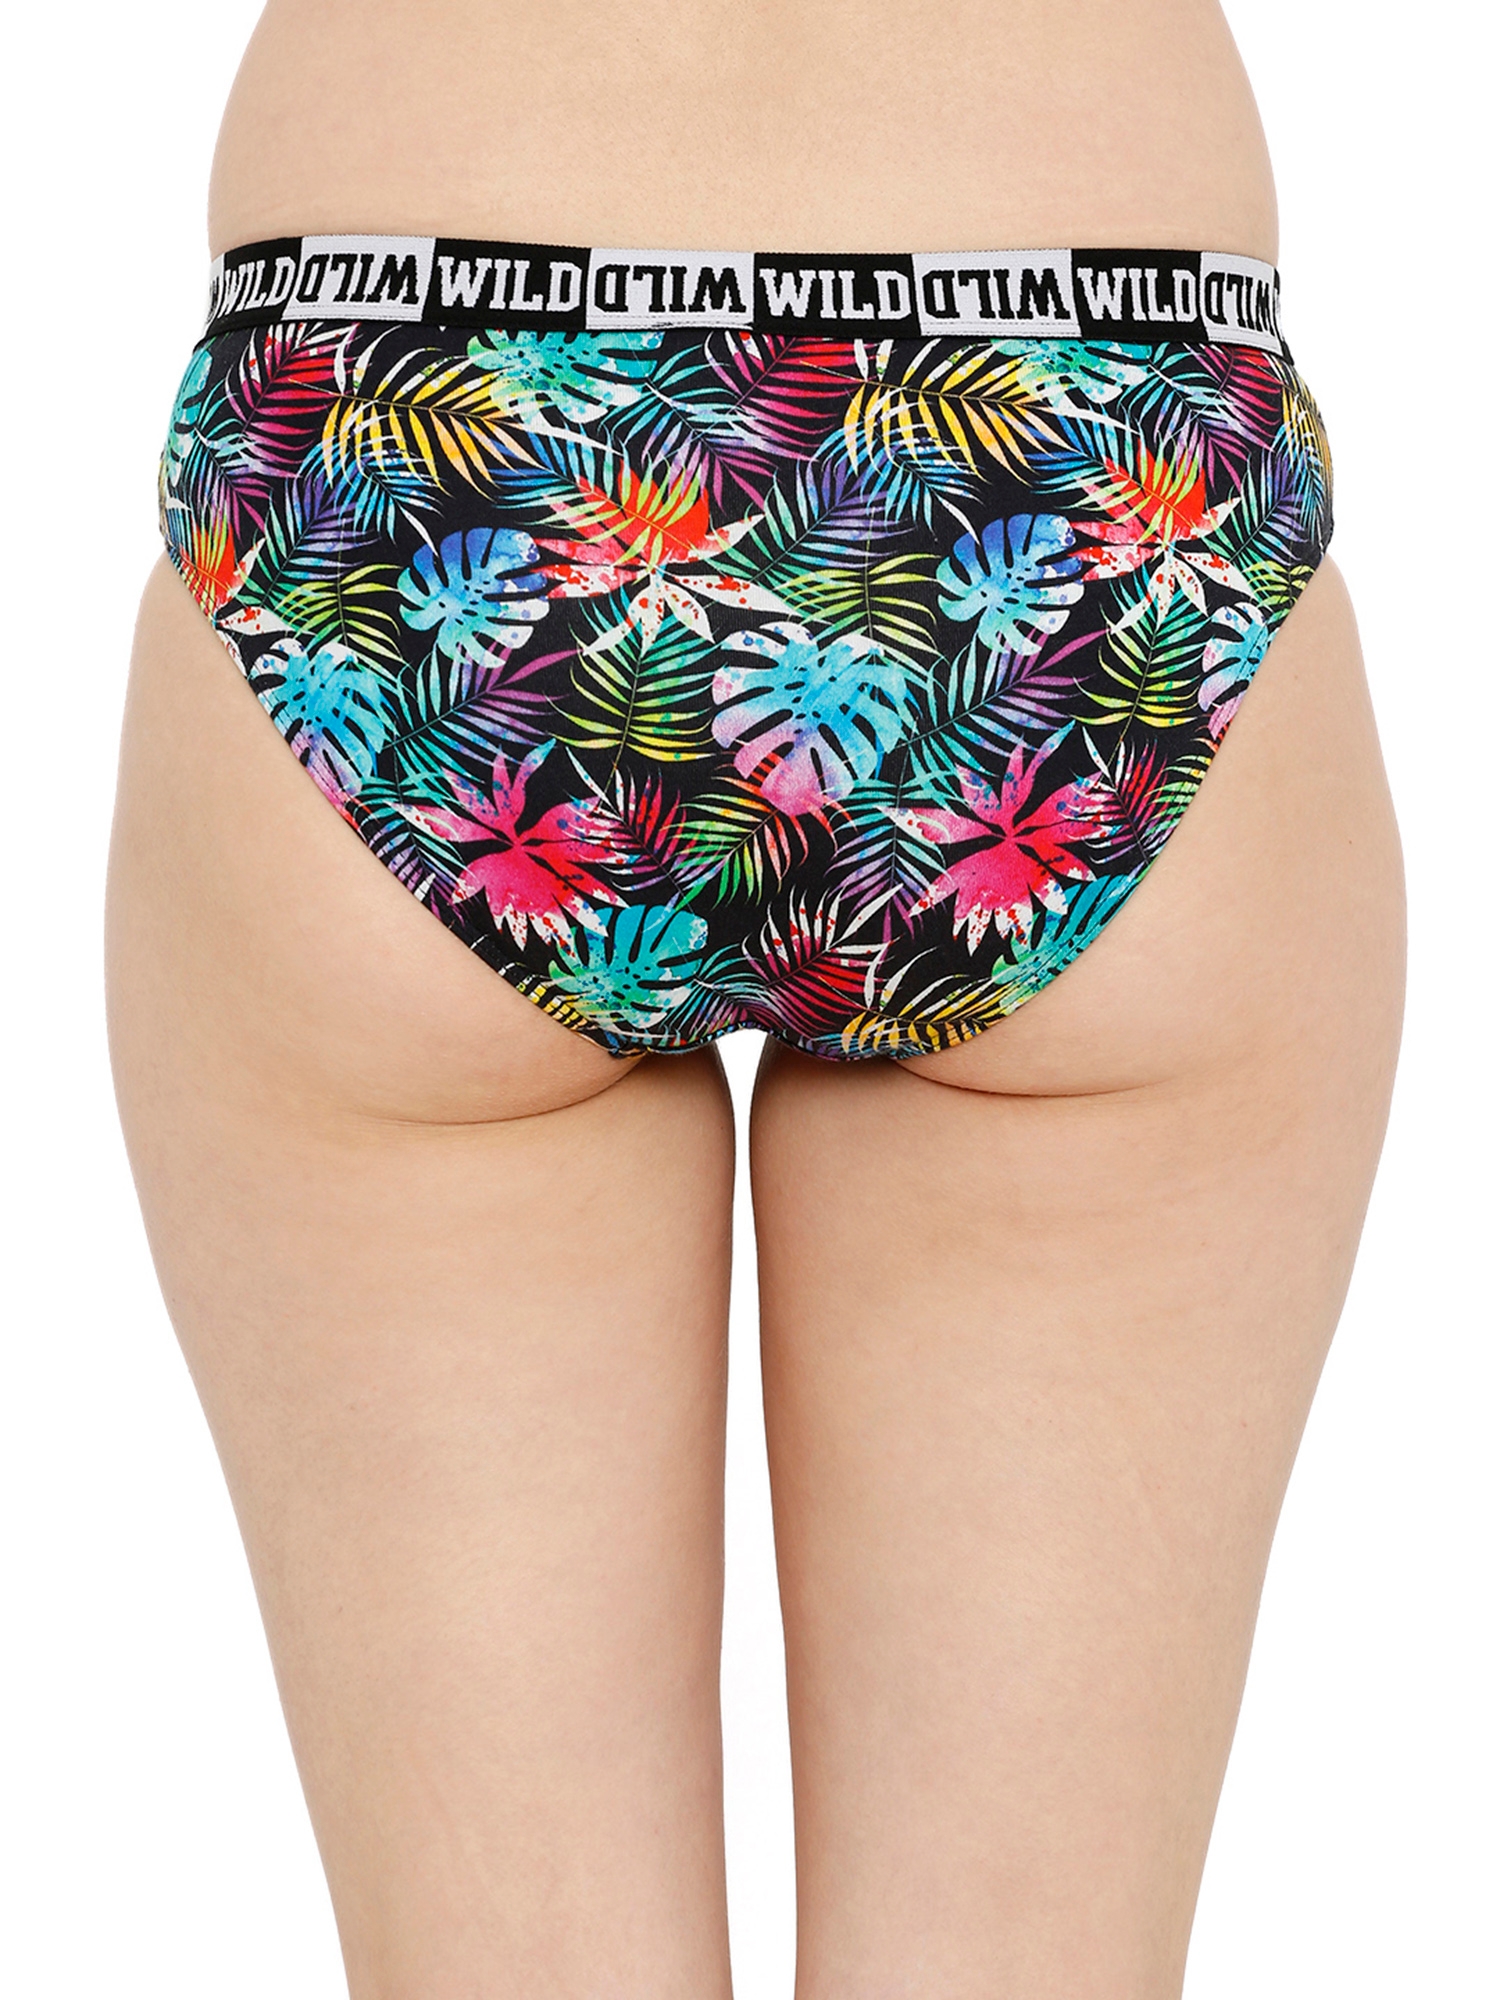 CANDYSKIN | Candyskin MTV Rainbow Printed Midrise Bikini Panty 2